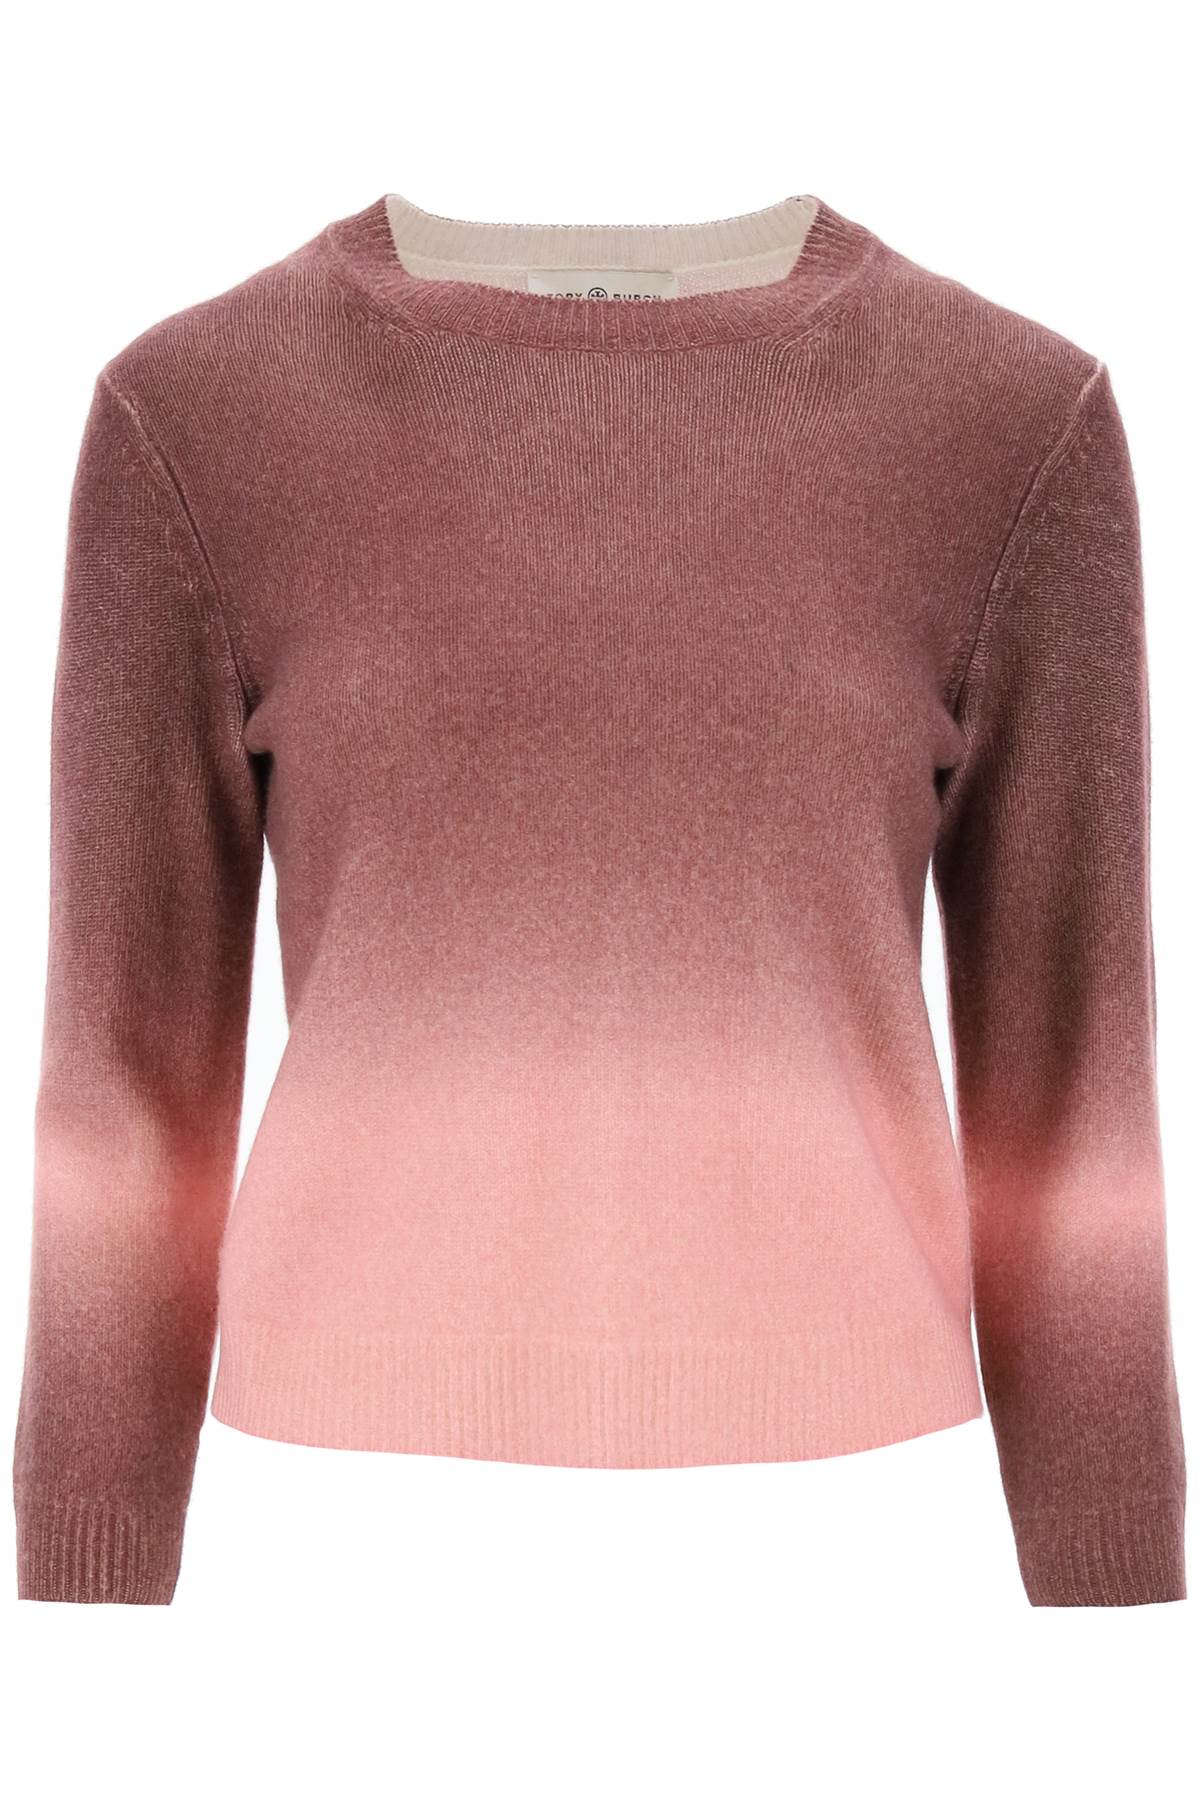 Tory Burch Dip-dye Cashmere Sweater